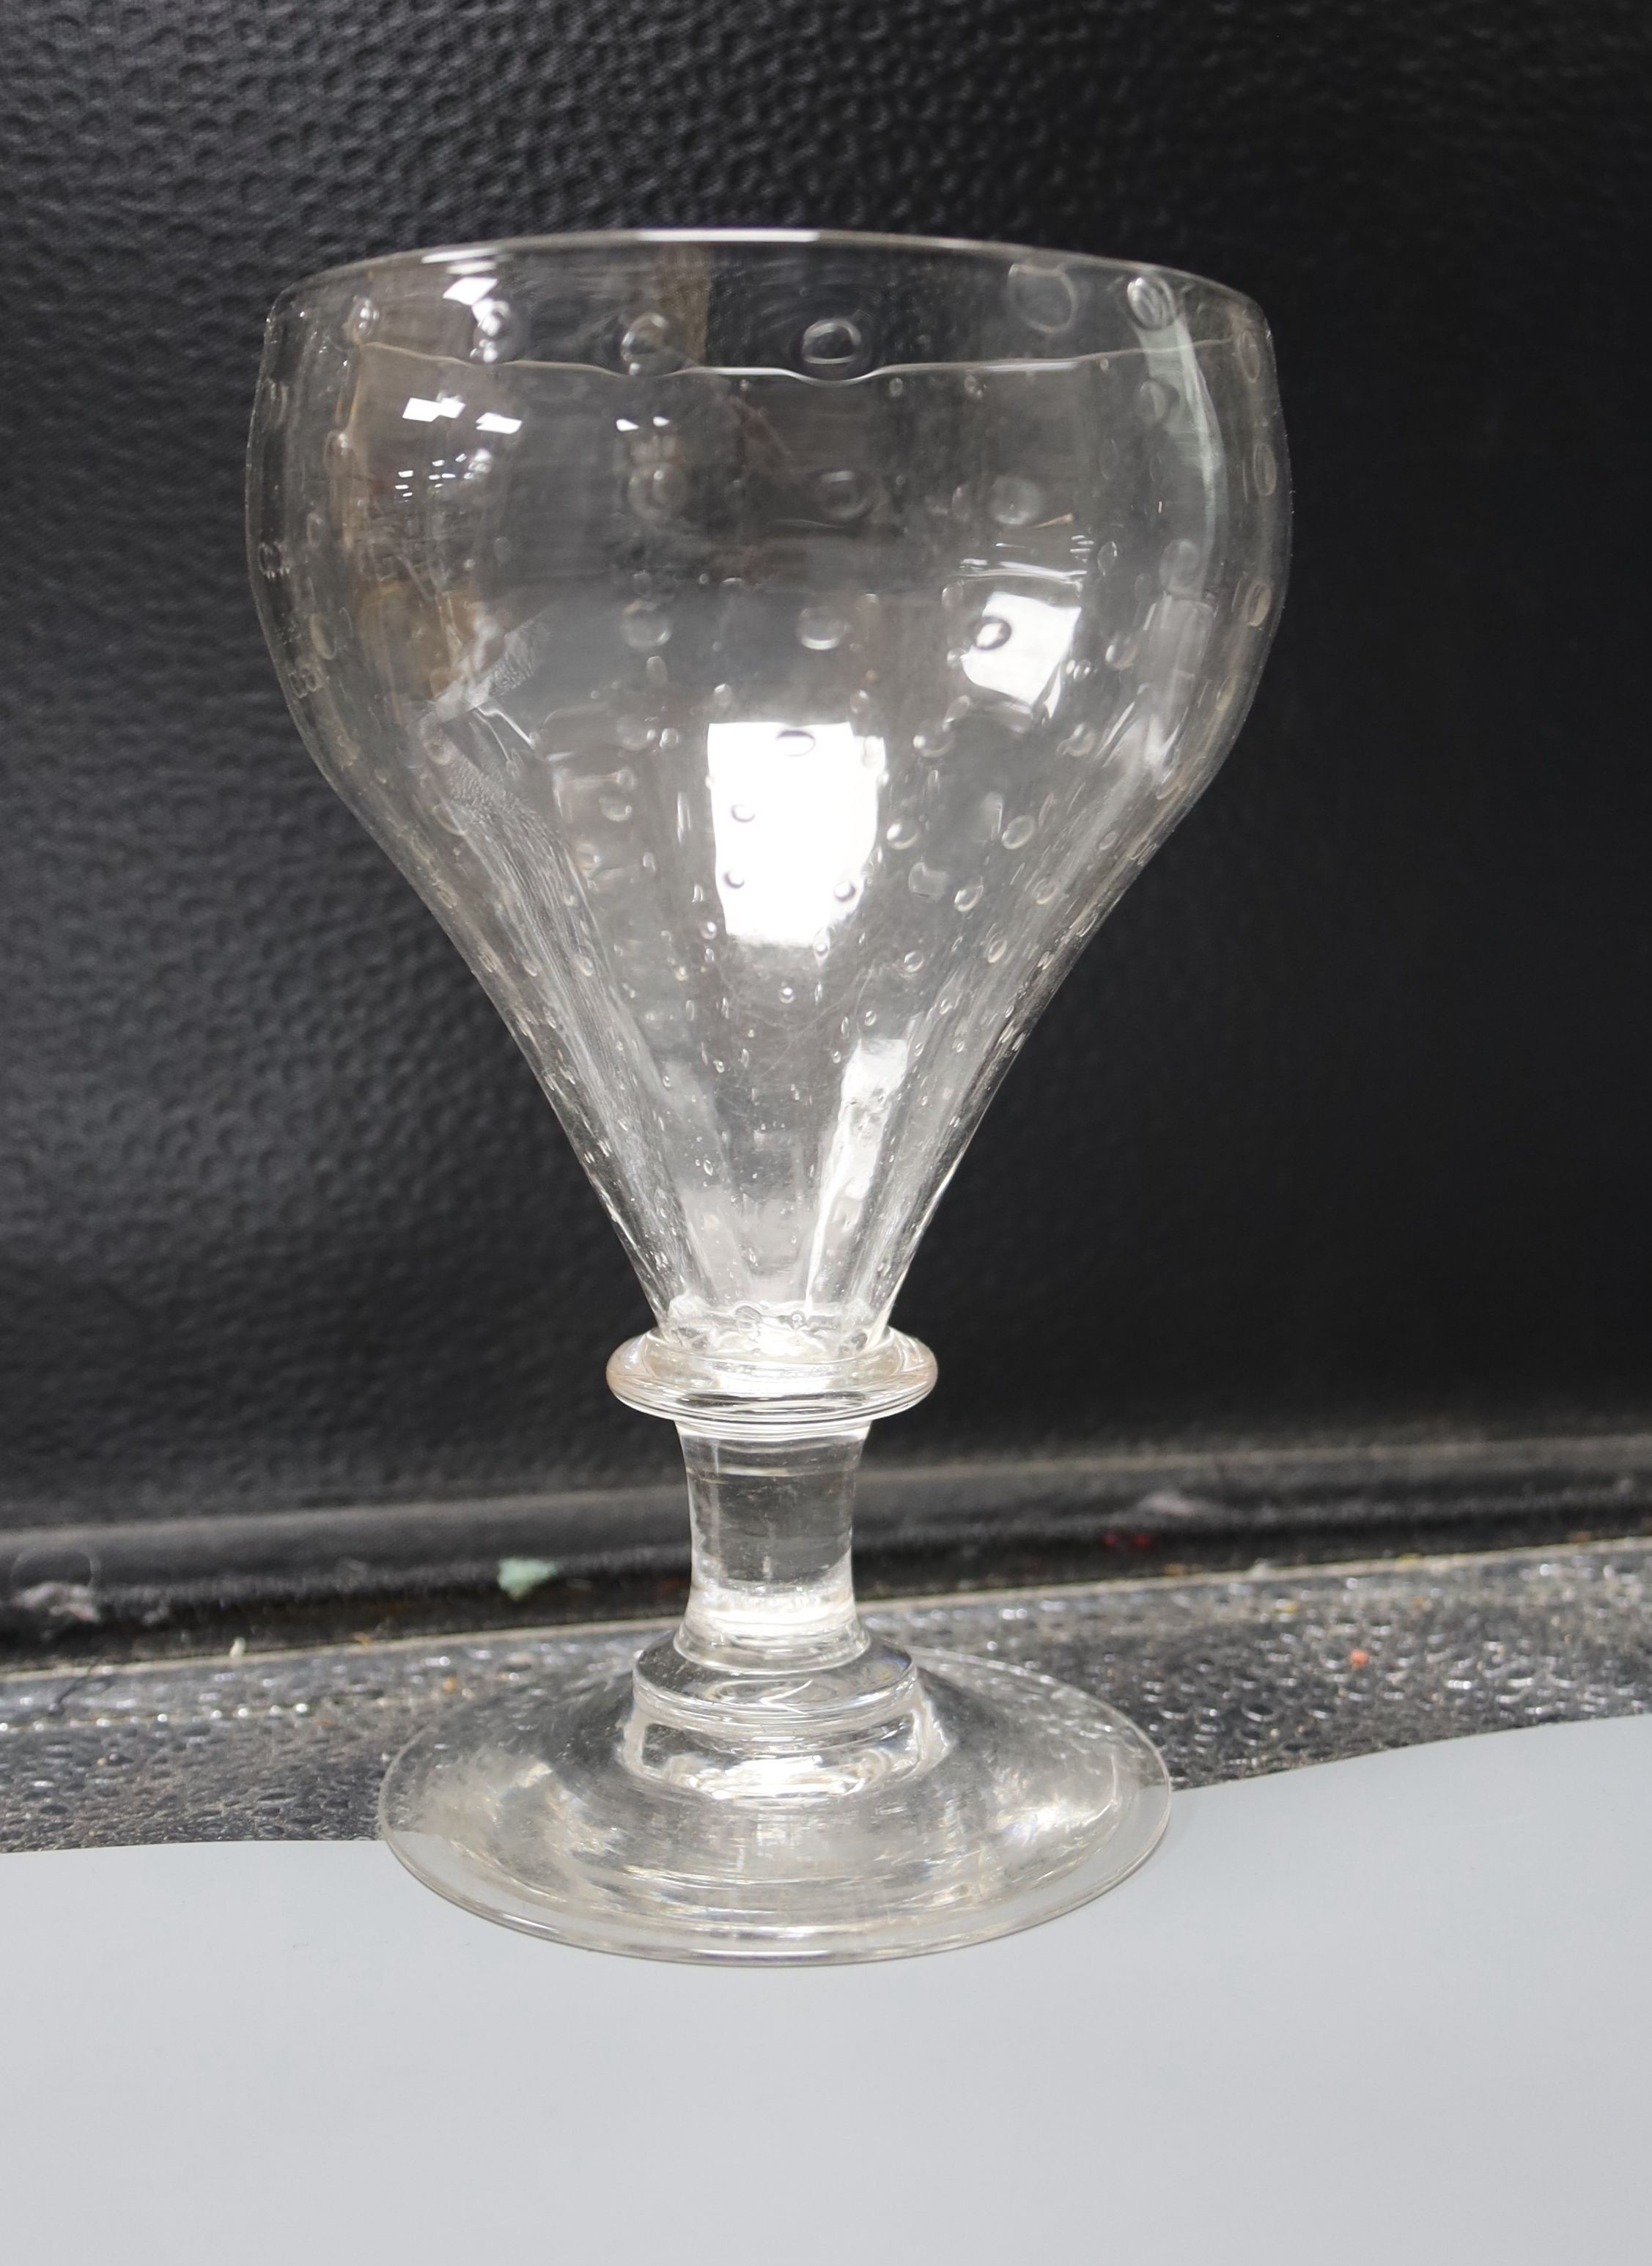 Six various glass rummers, 15.5cm